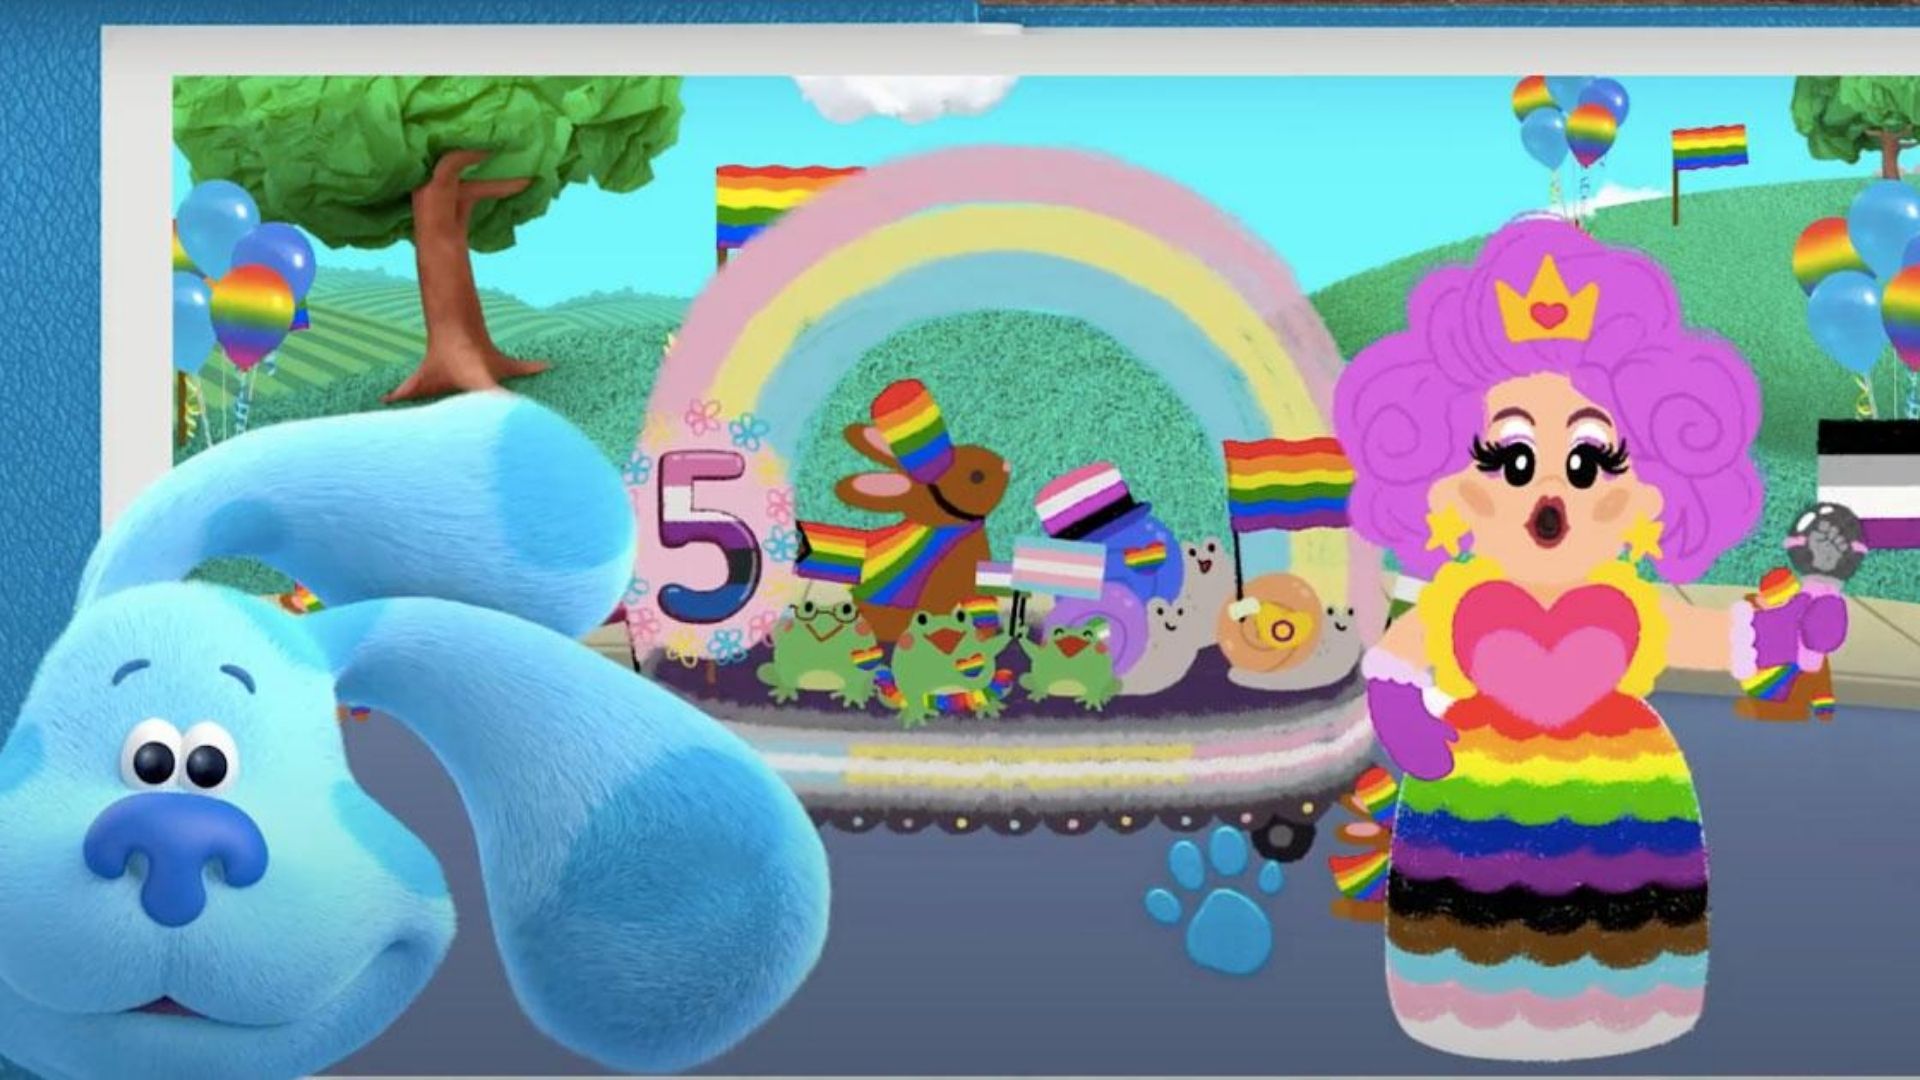 Novo desenho infantil da Nickelodeon mostra drag queen apresentando desfile LGBT